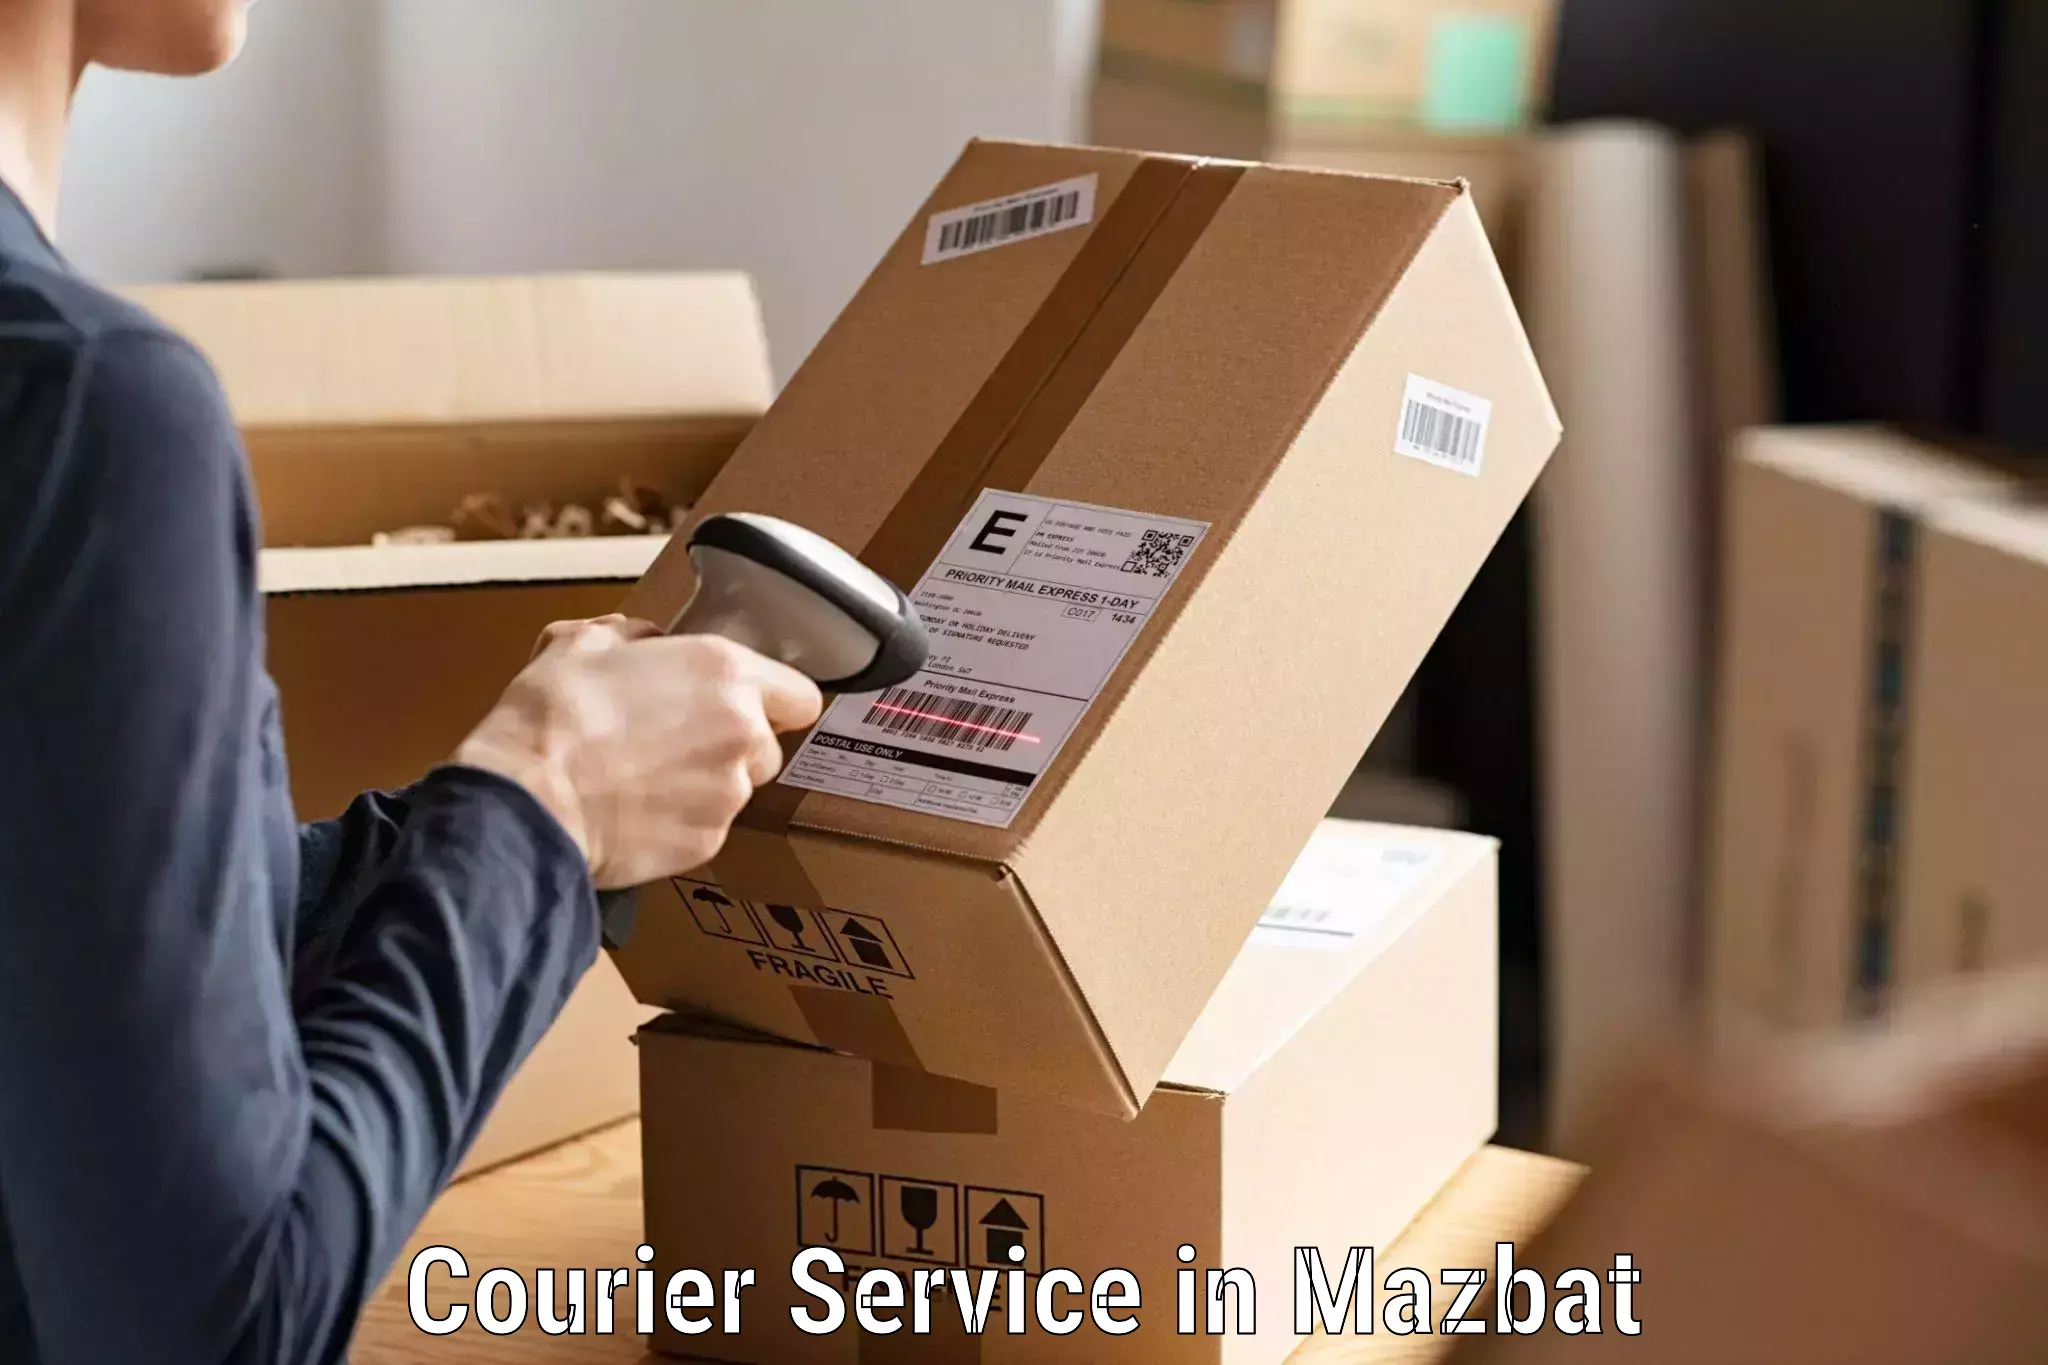 Efficient package consolidation in Mazbat